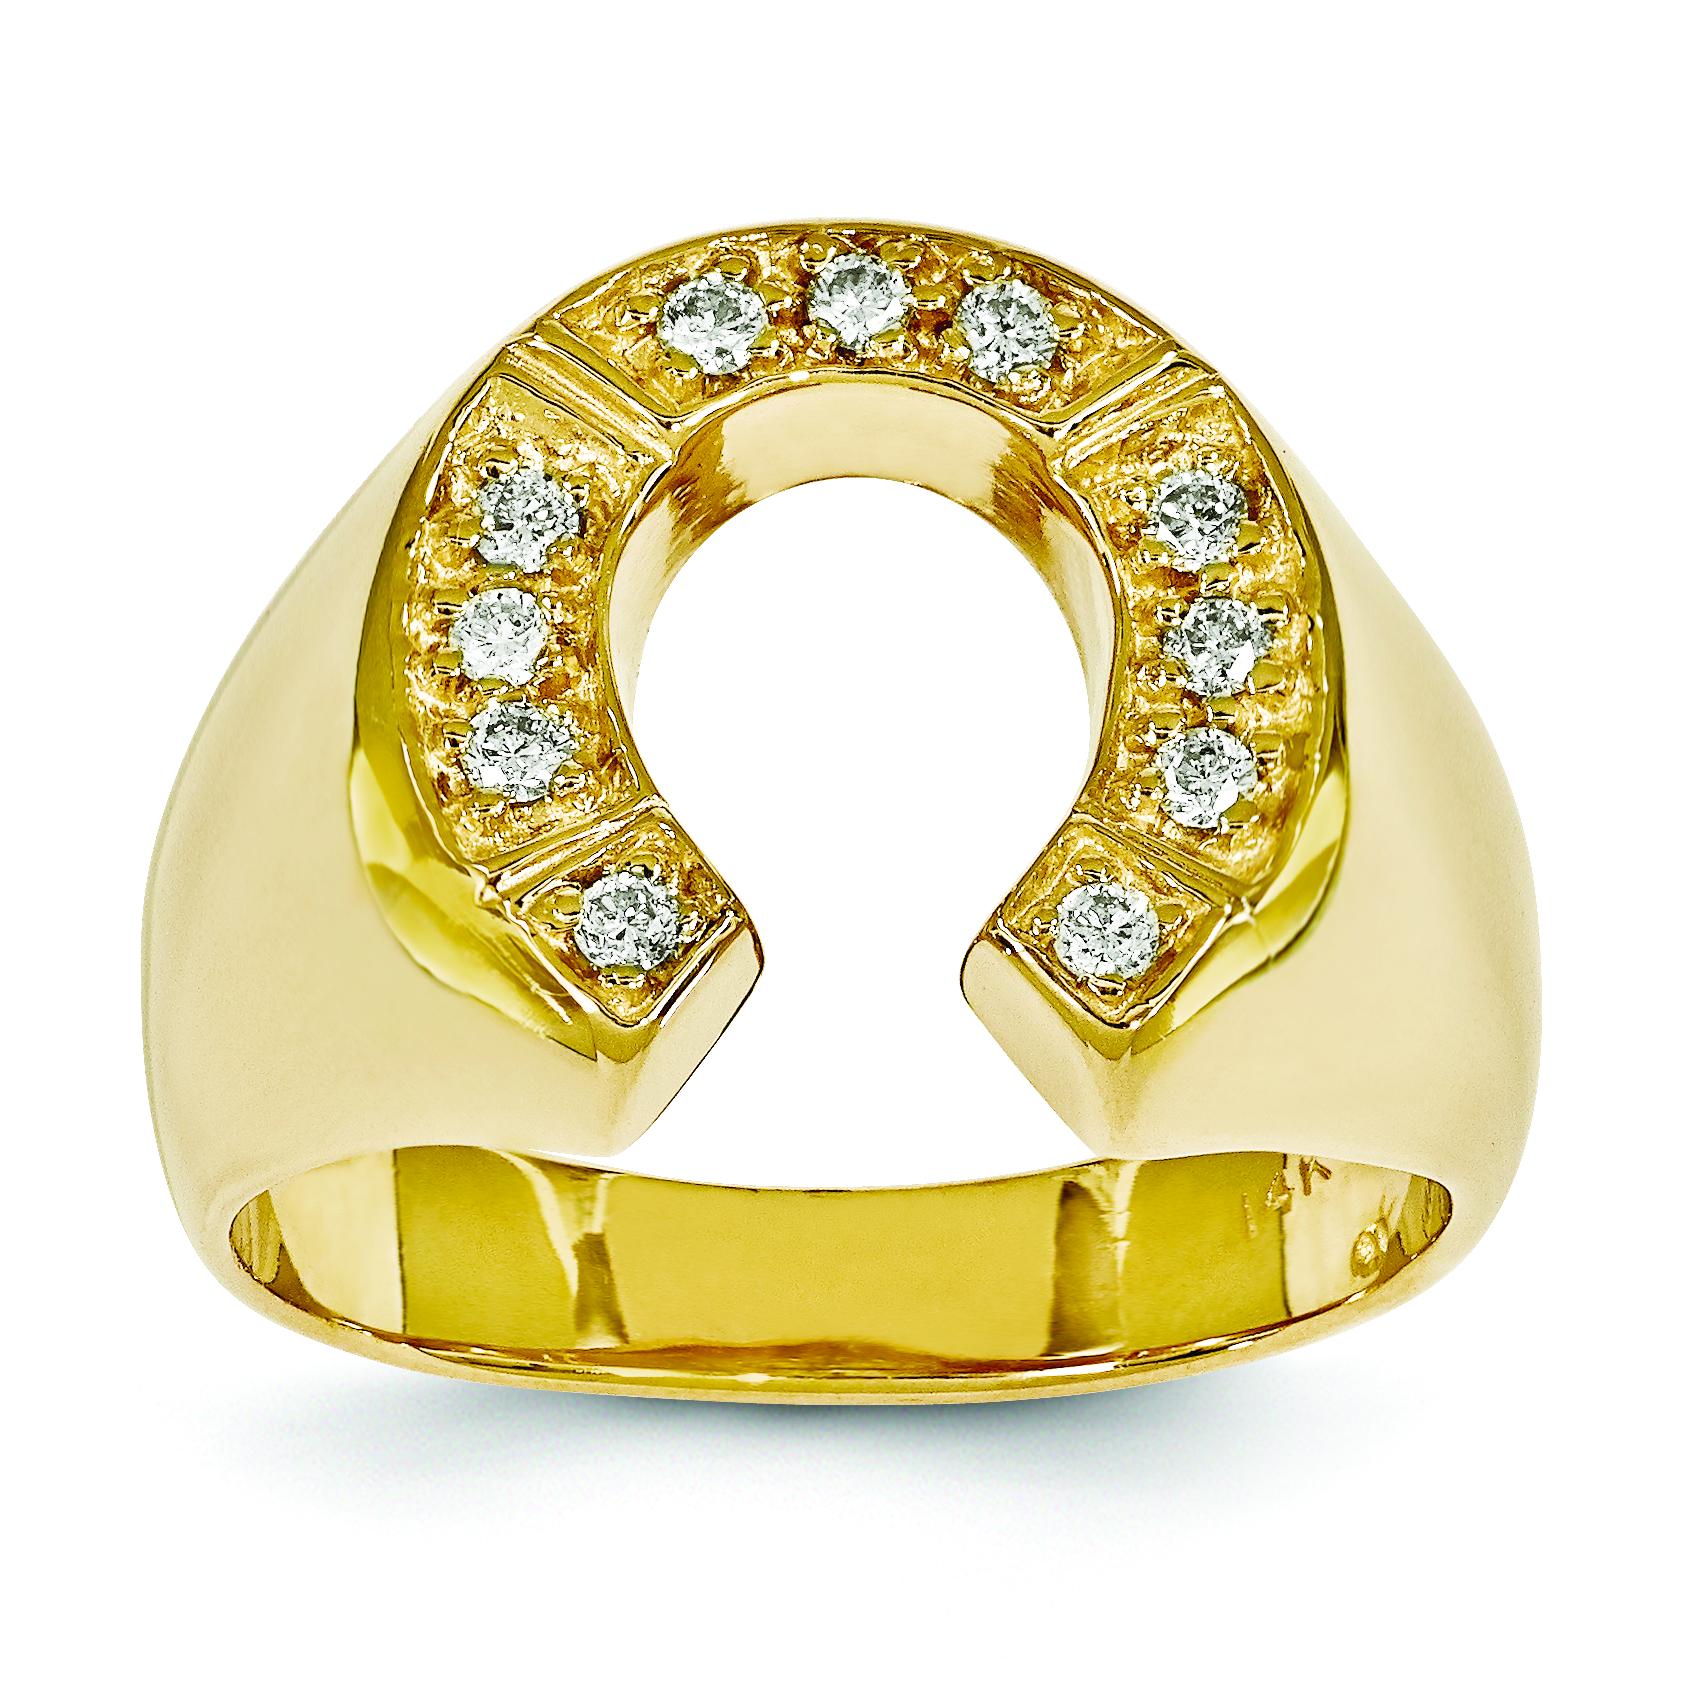 Findingking 14K Gold Diamond Horseshoe Mens Ring Jewelry Sz 10